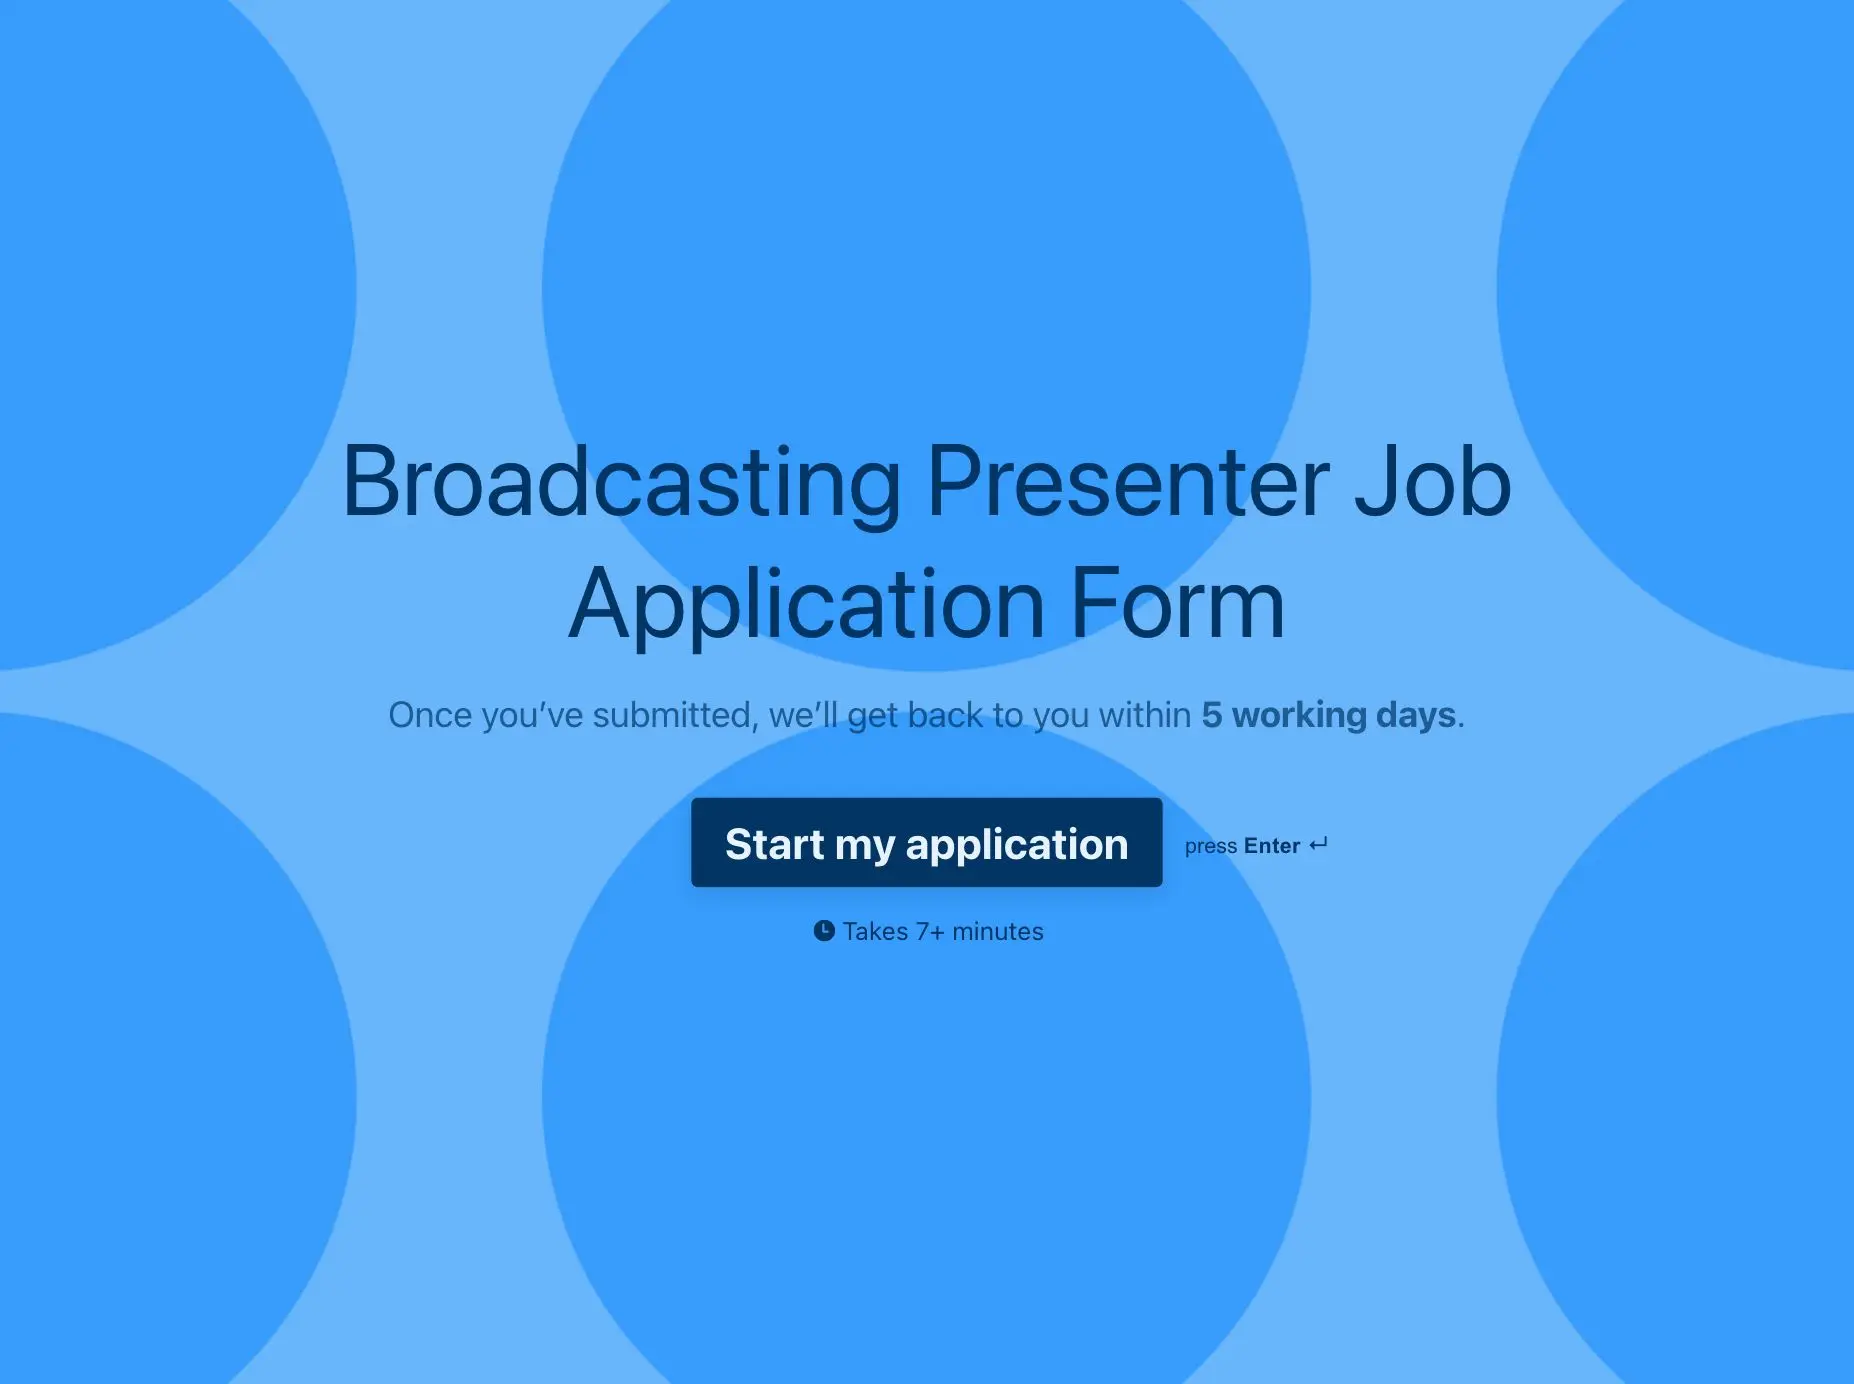 Broadcasting Presenter Job Application Form Template Hero